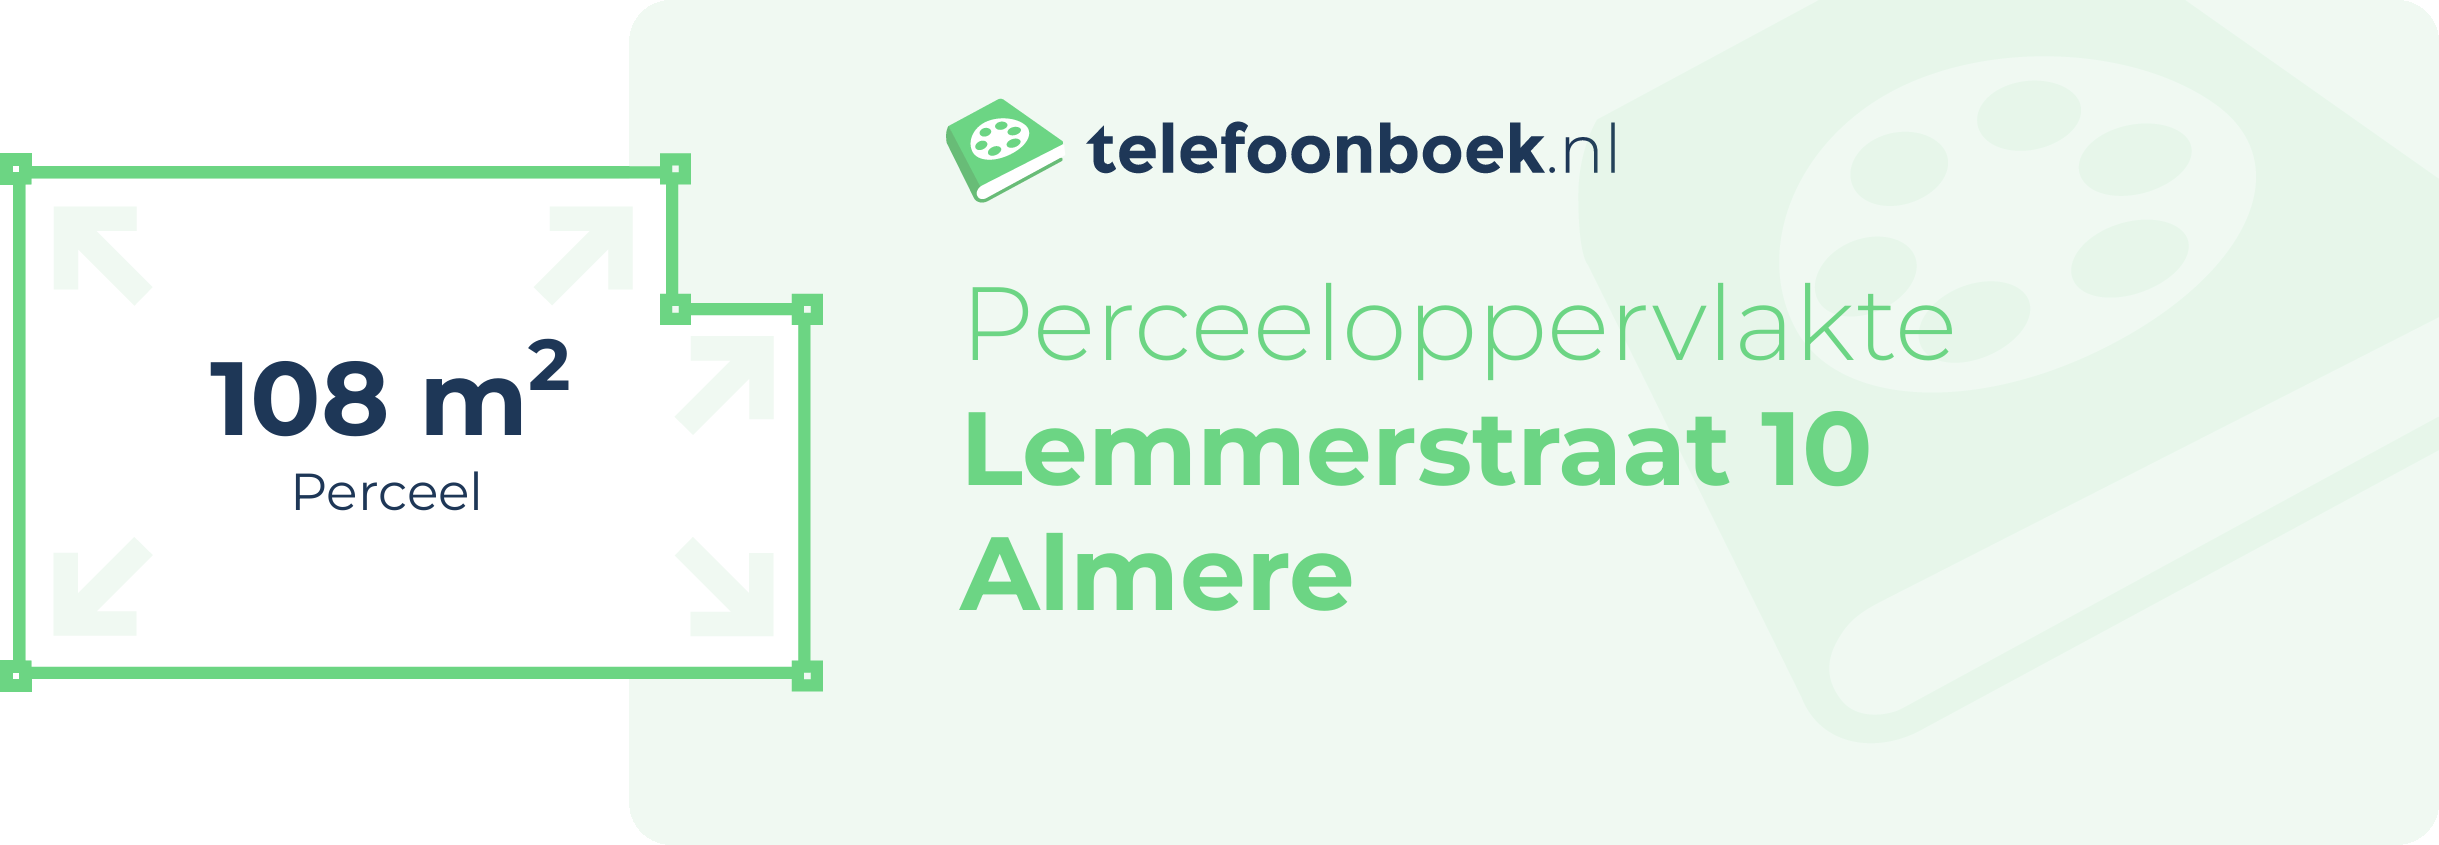 Perceeloppervlakte Lemmerstraat 10 Almere